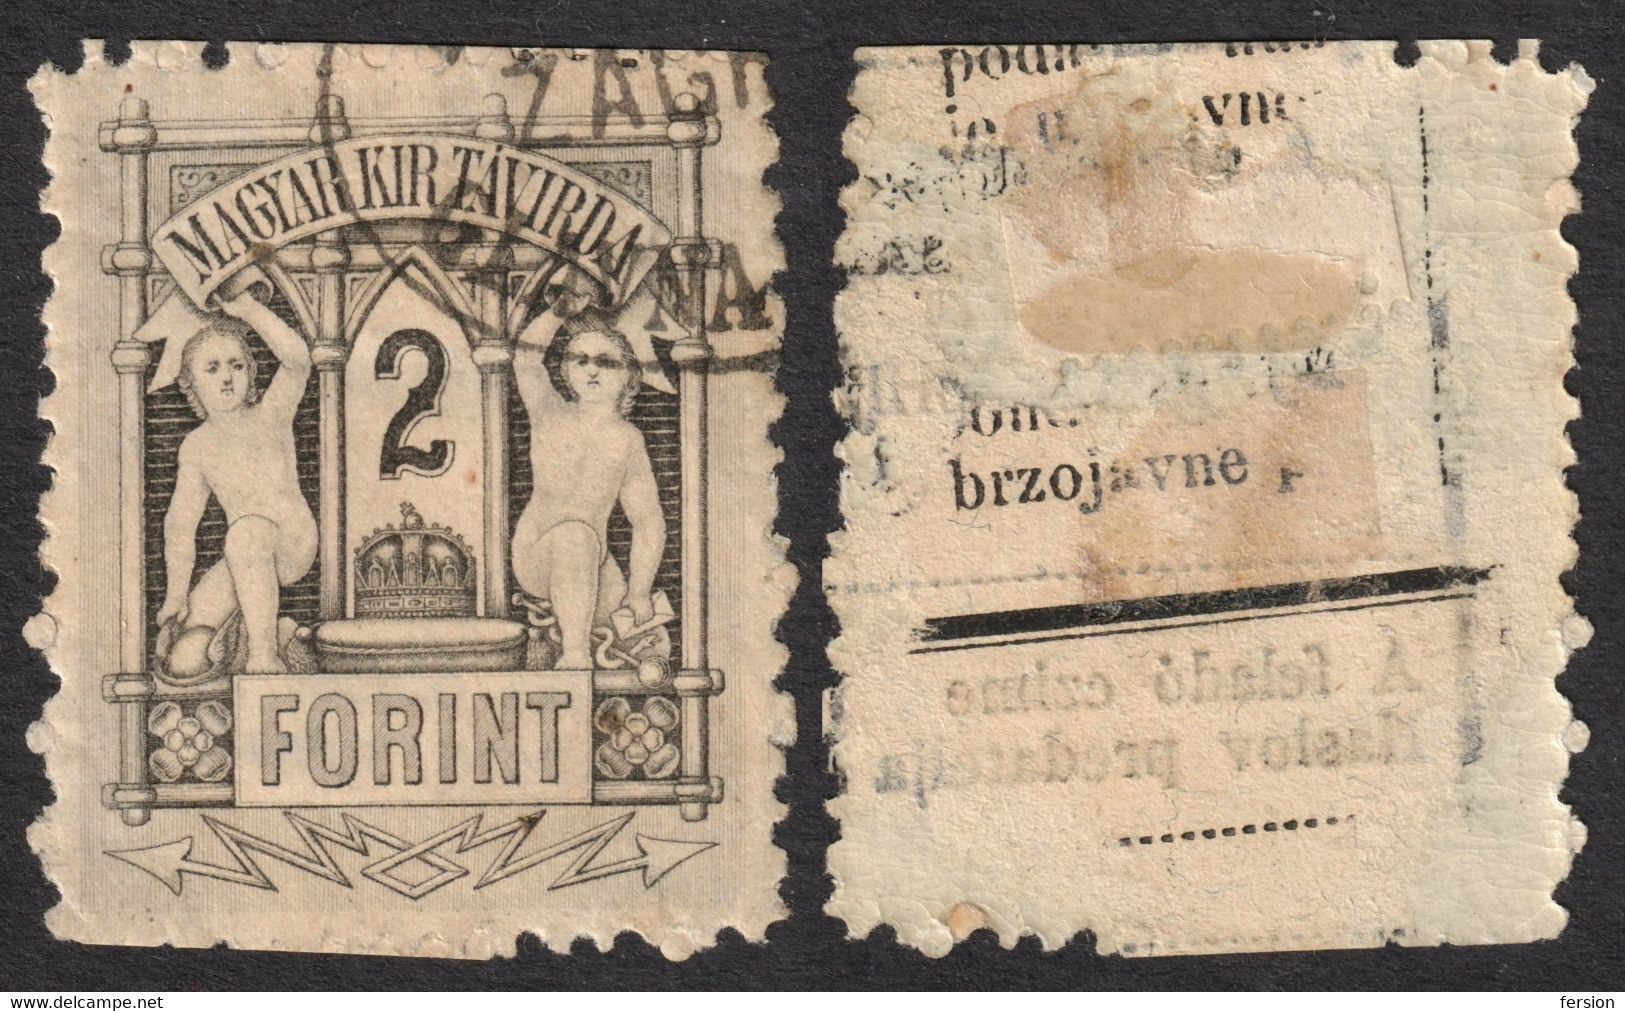 Zagreb Postmark CROATIA - TELEGRAPH Telegram TAX Stamp - 1873 HUNGARY - Copper Print 2 Ft - Used - Telegraaf